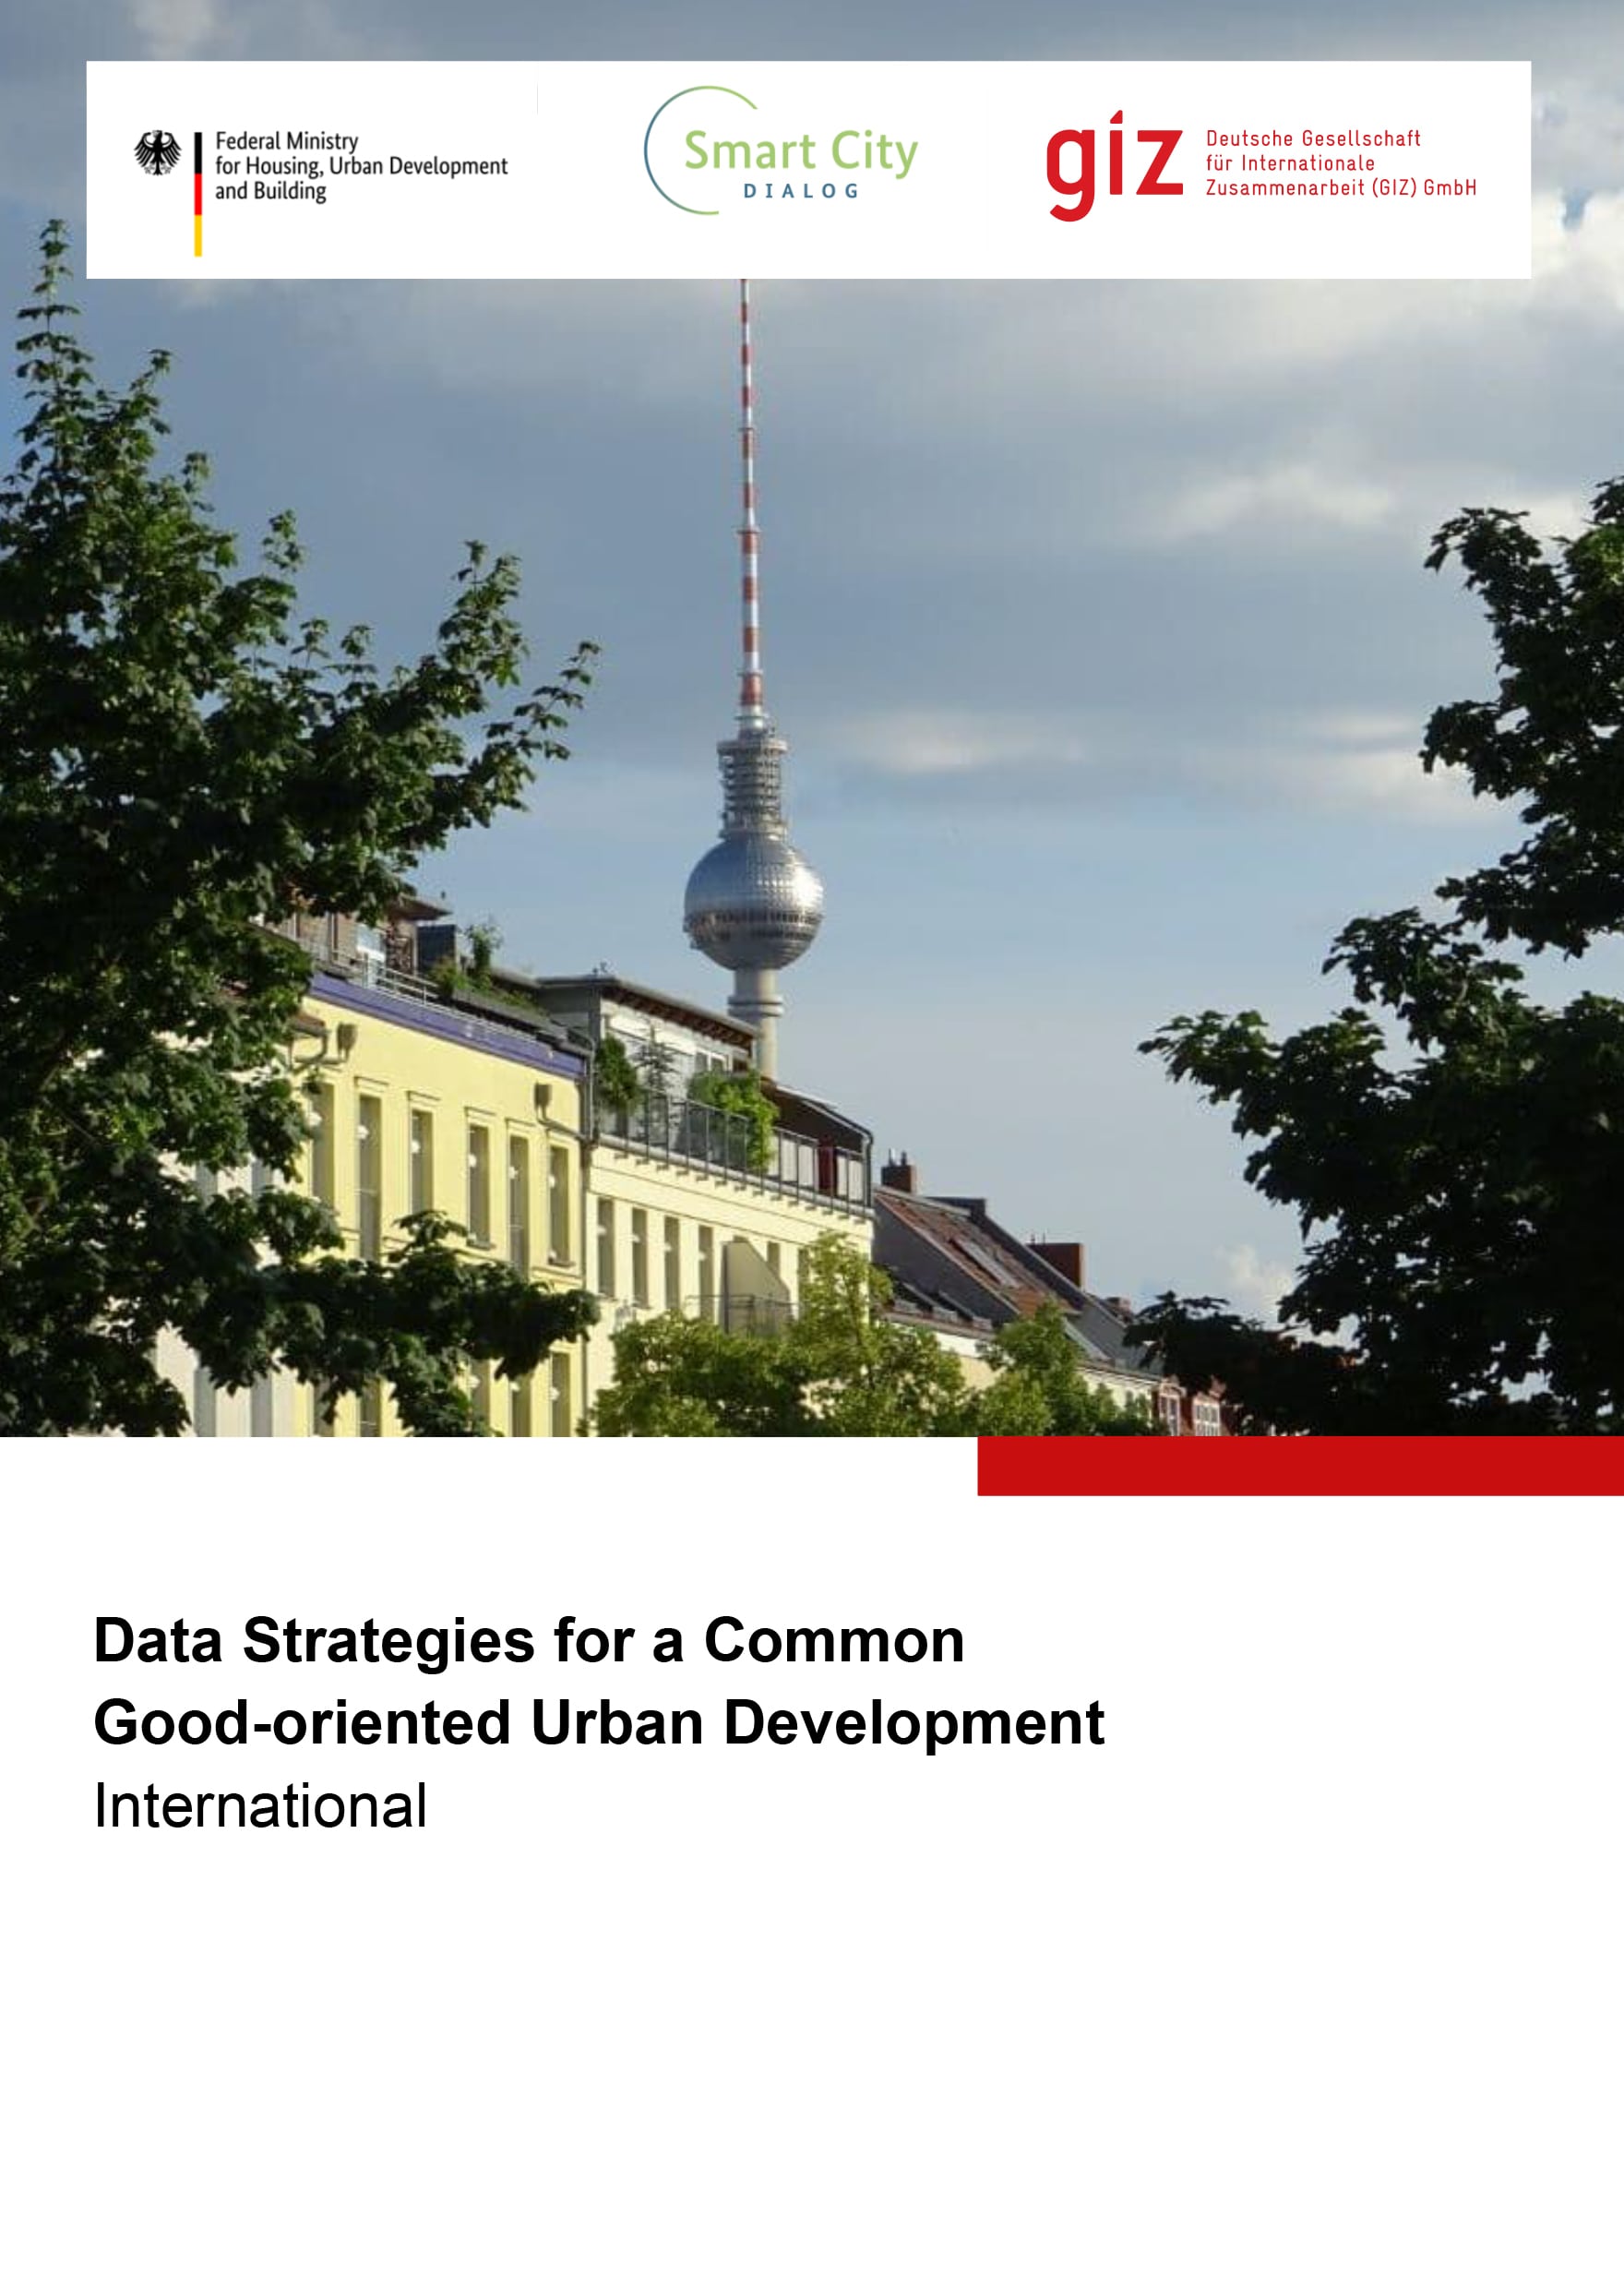 Data strategies for common good-oriented urban development